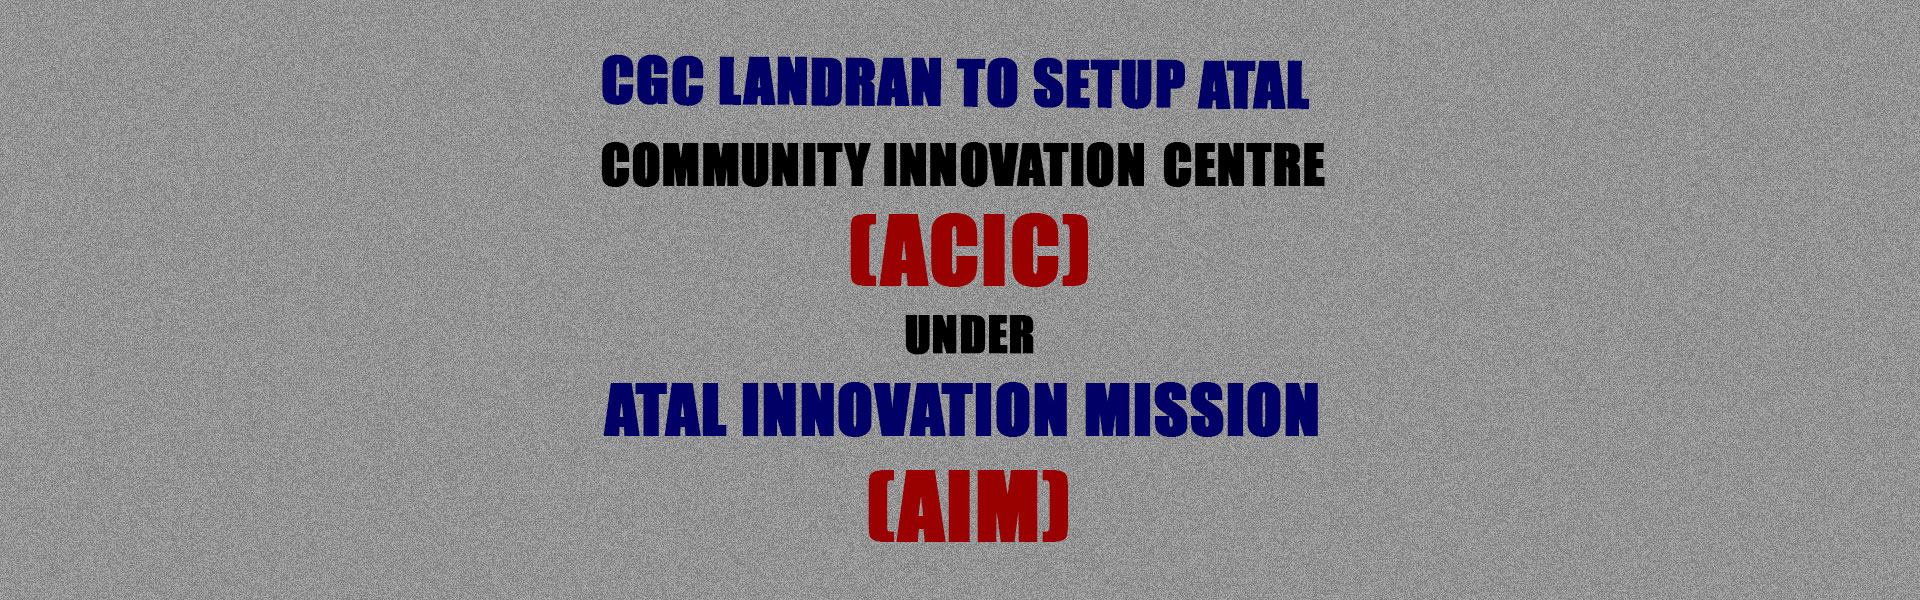 CGC Landran to setup Atal Community Innovation Centre (ACIC) under Atal Innovation Mission (AIM) 